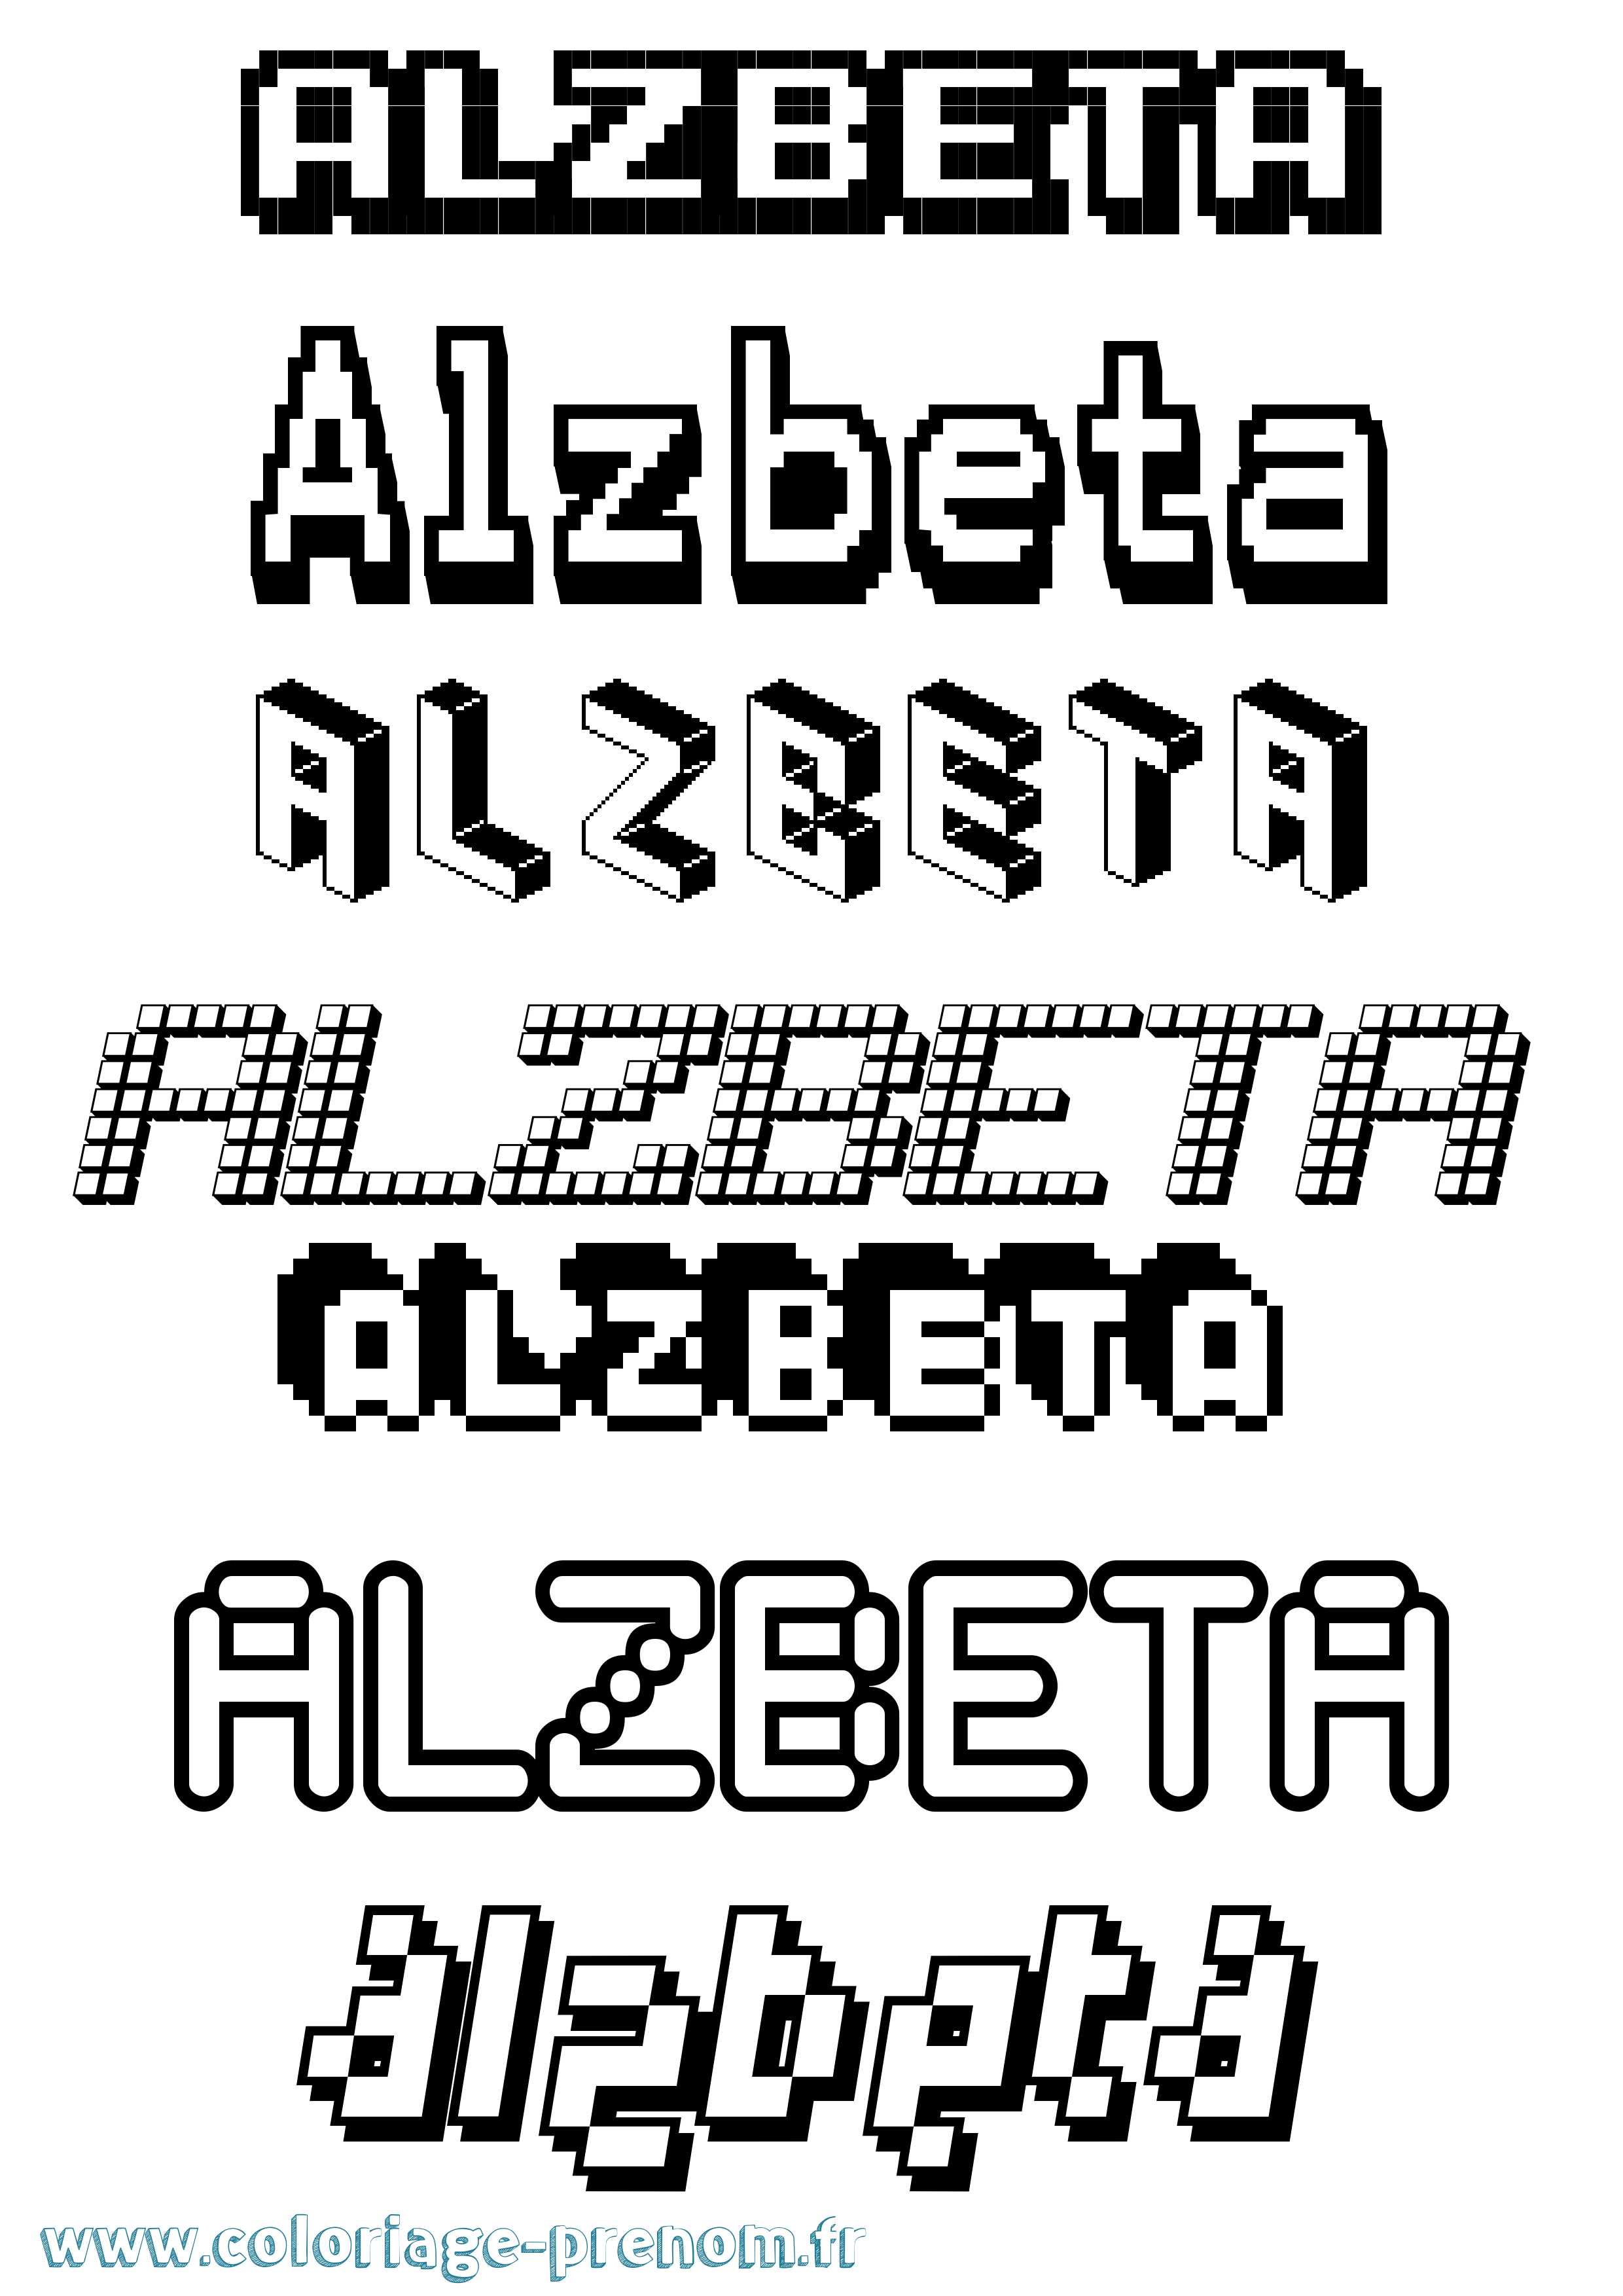 Coloriage prénom Alzbeta Pixel